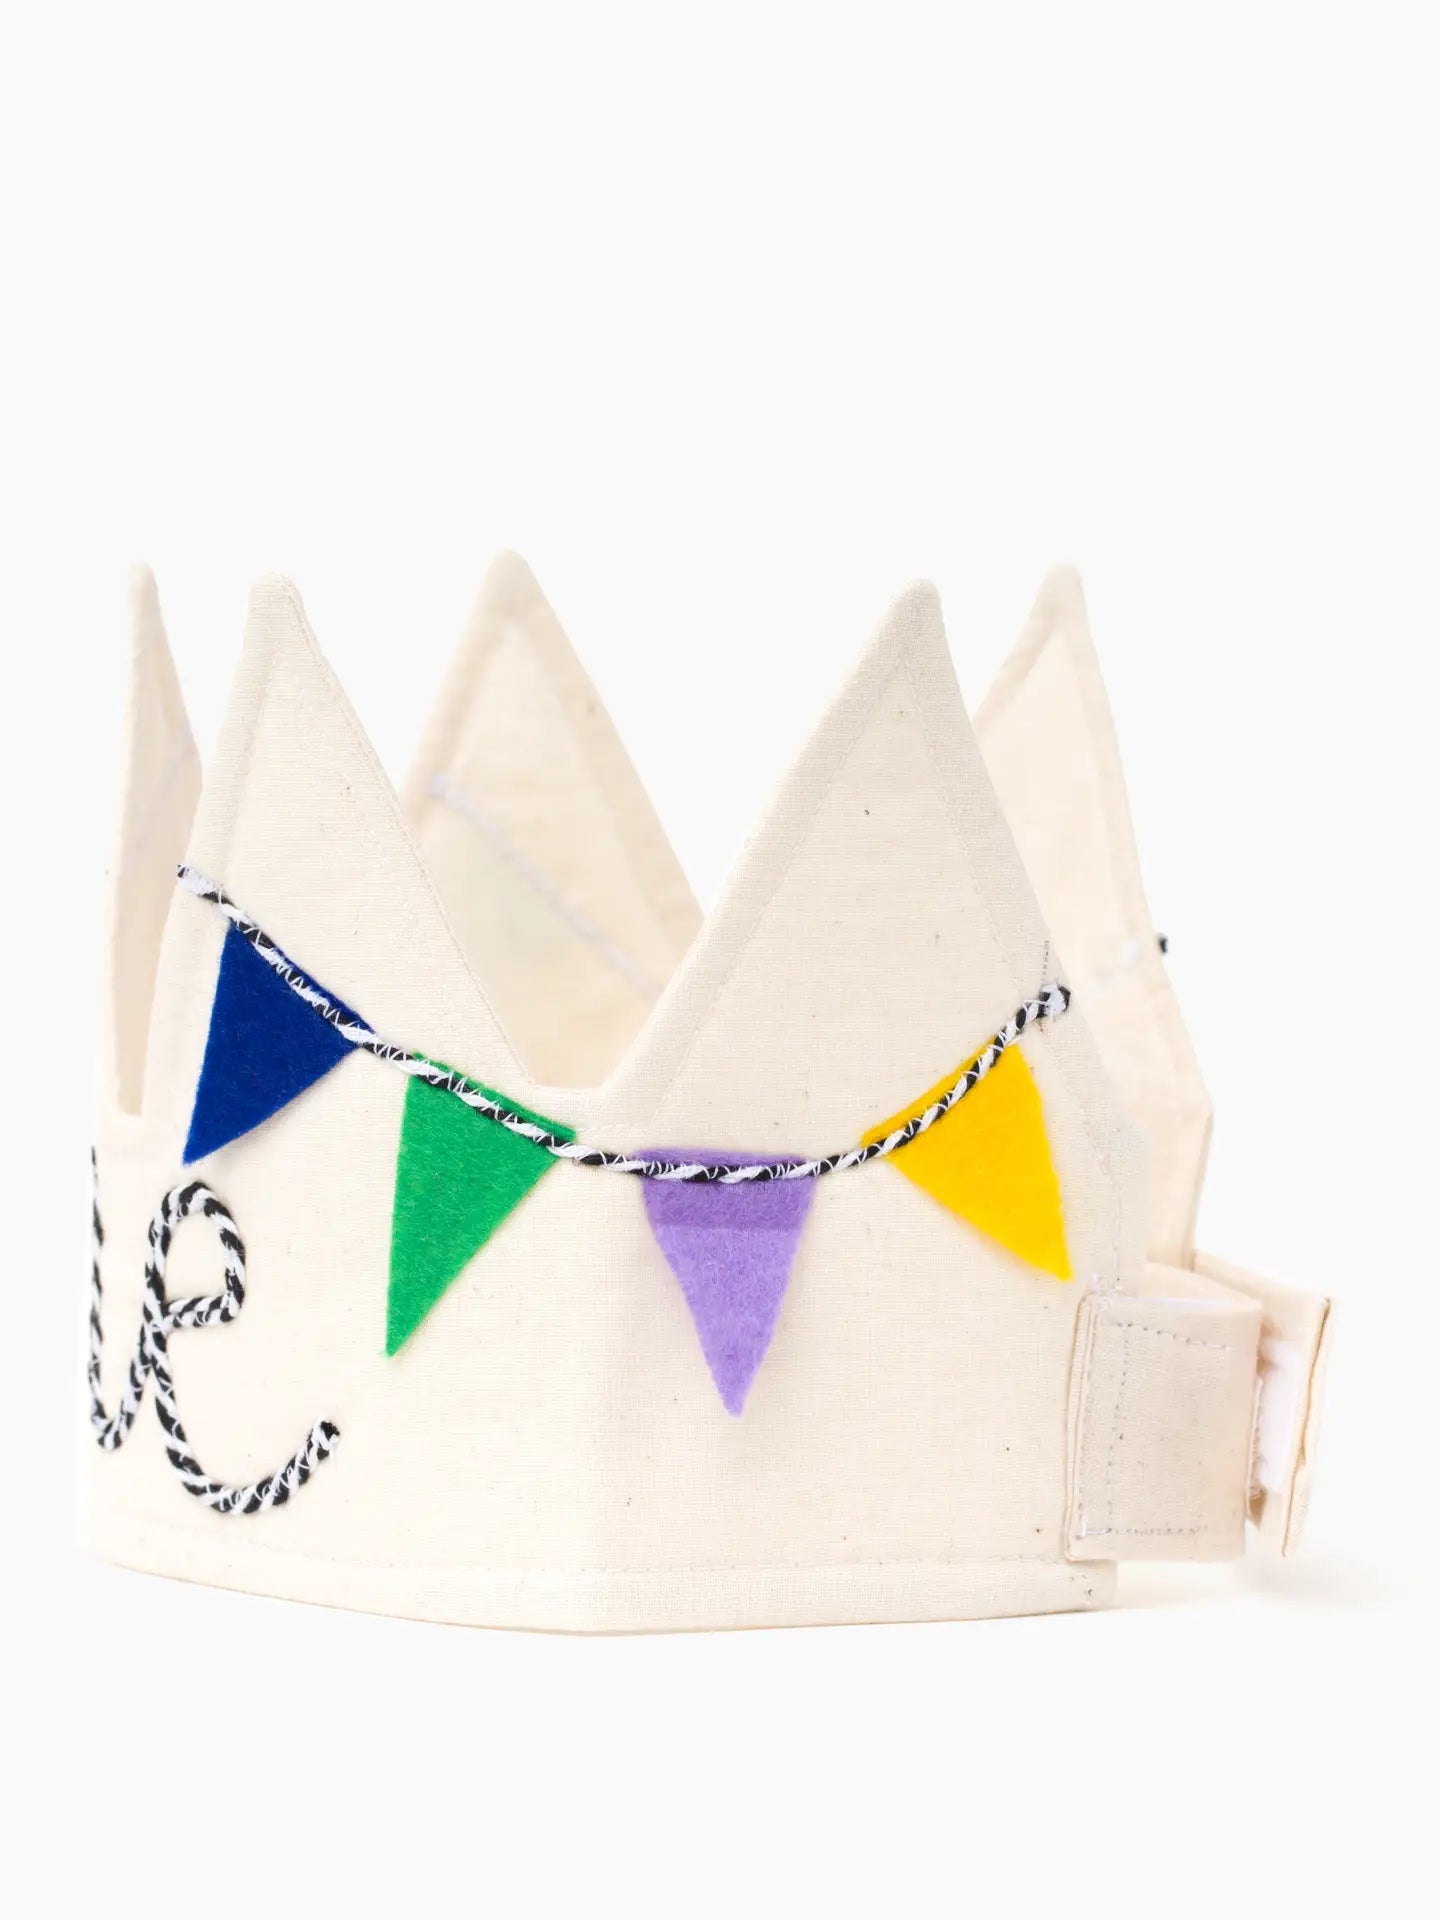 First Birthday Crown